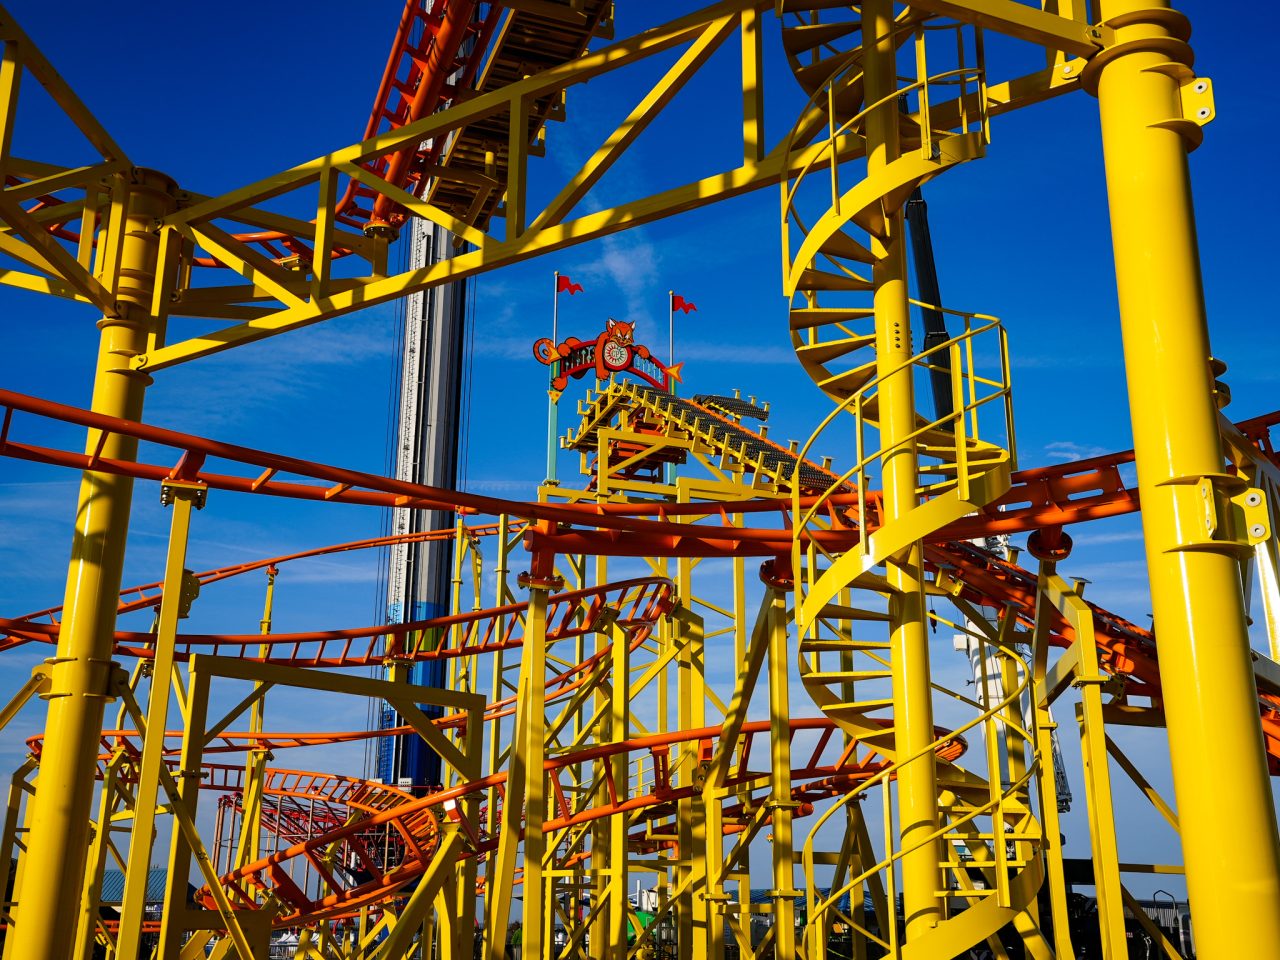  Photos: Progress made on ‘Wild’ new Cedar Point ride 